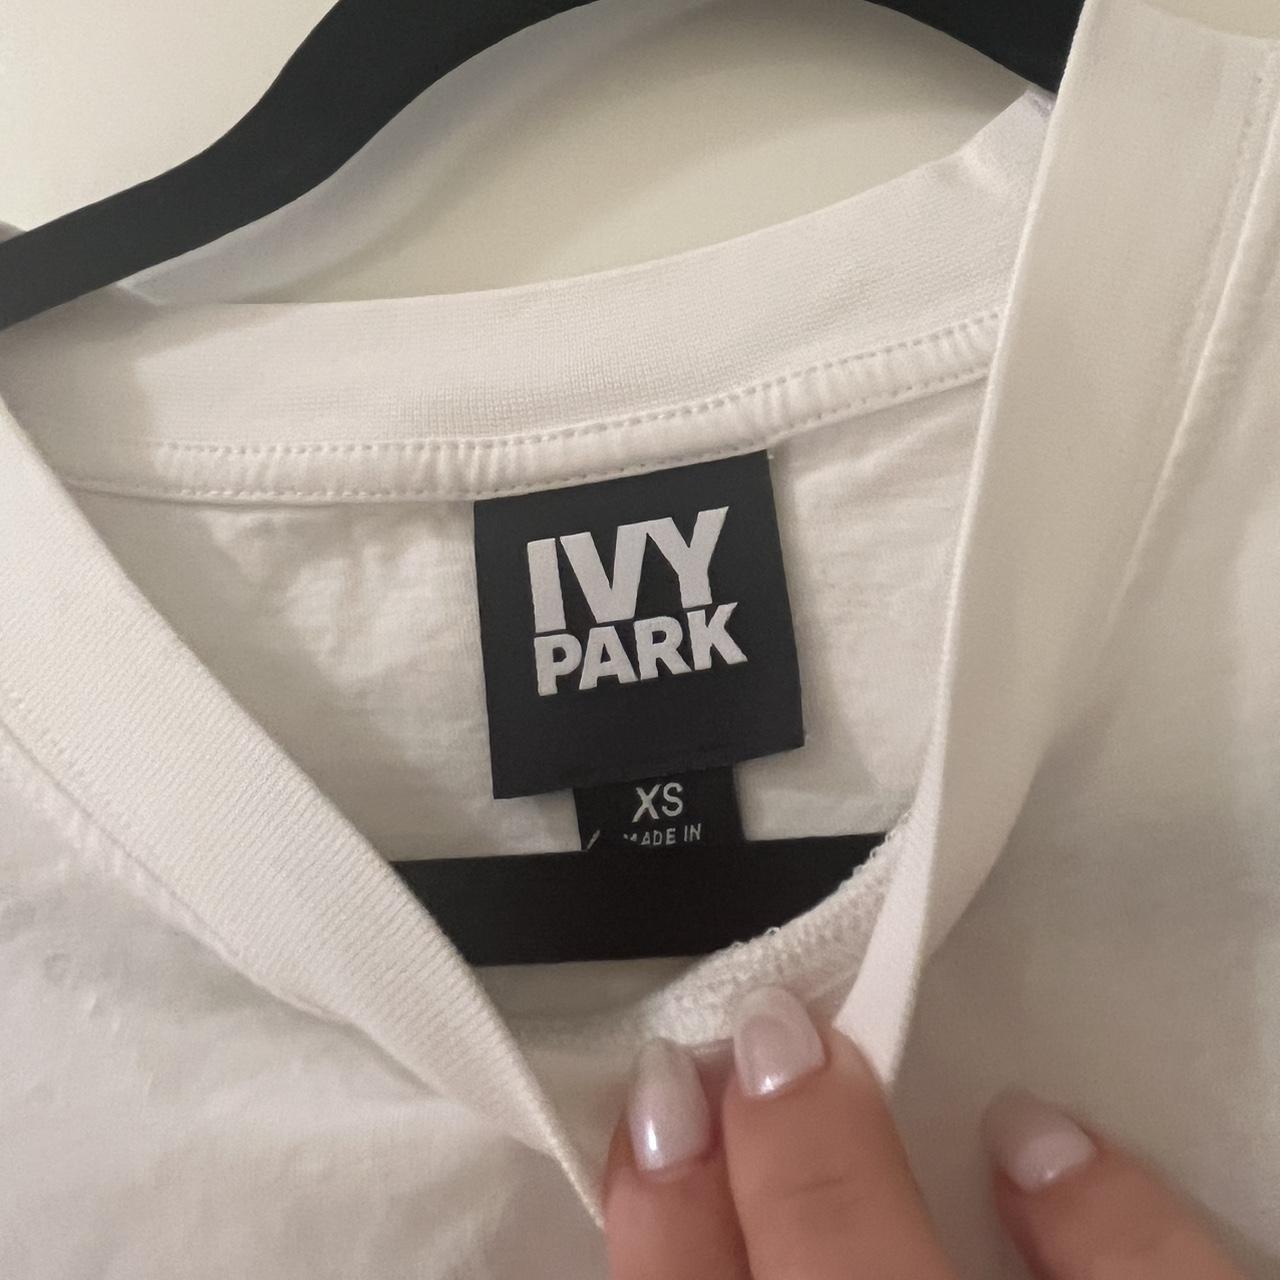 Ivy Park Men's White and Black T-shirt | Depop